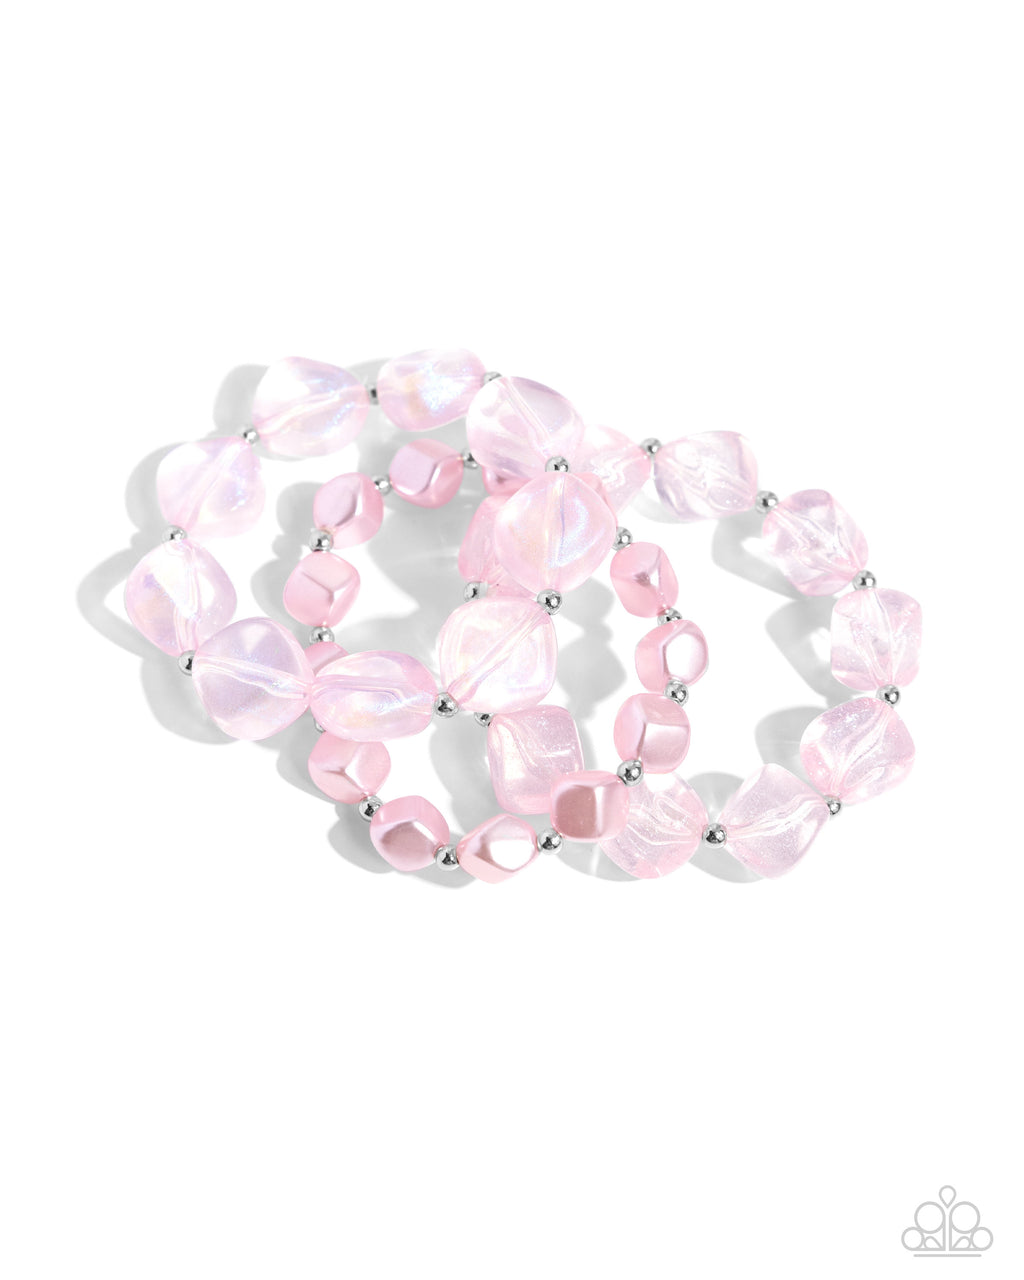 five-dollar-jewelry-glittery-gala-pink-bracelet-paparazzi-accessories